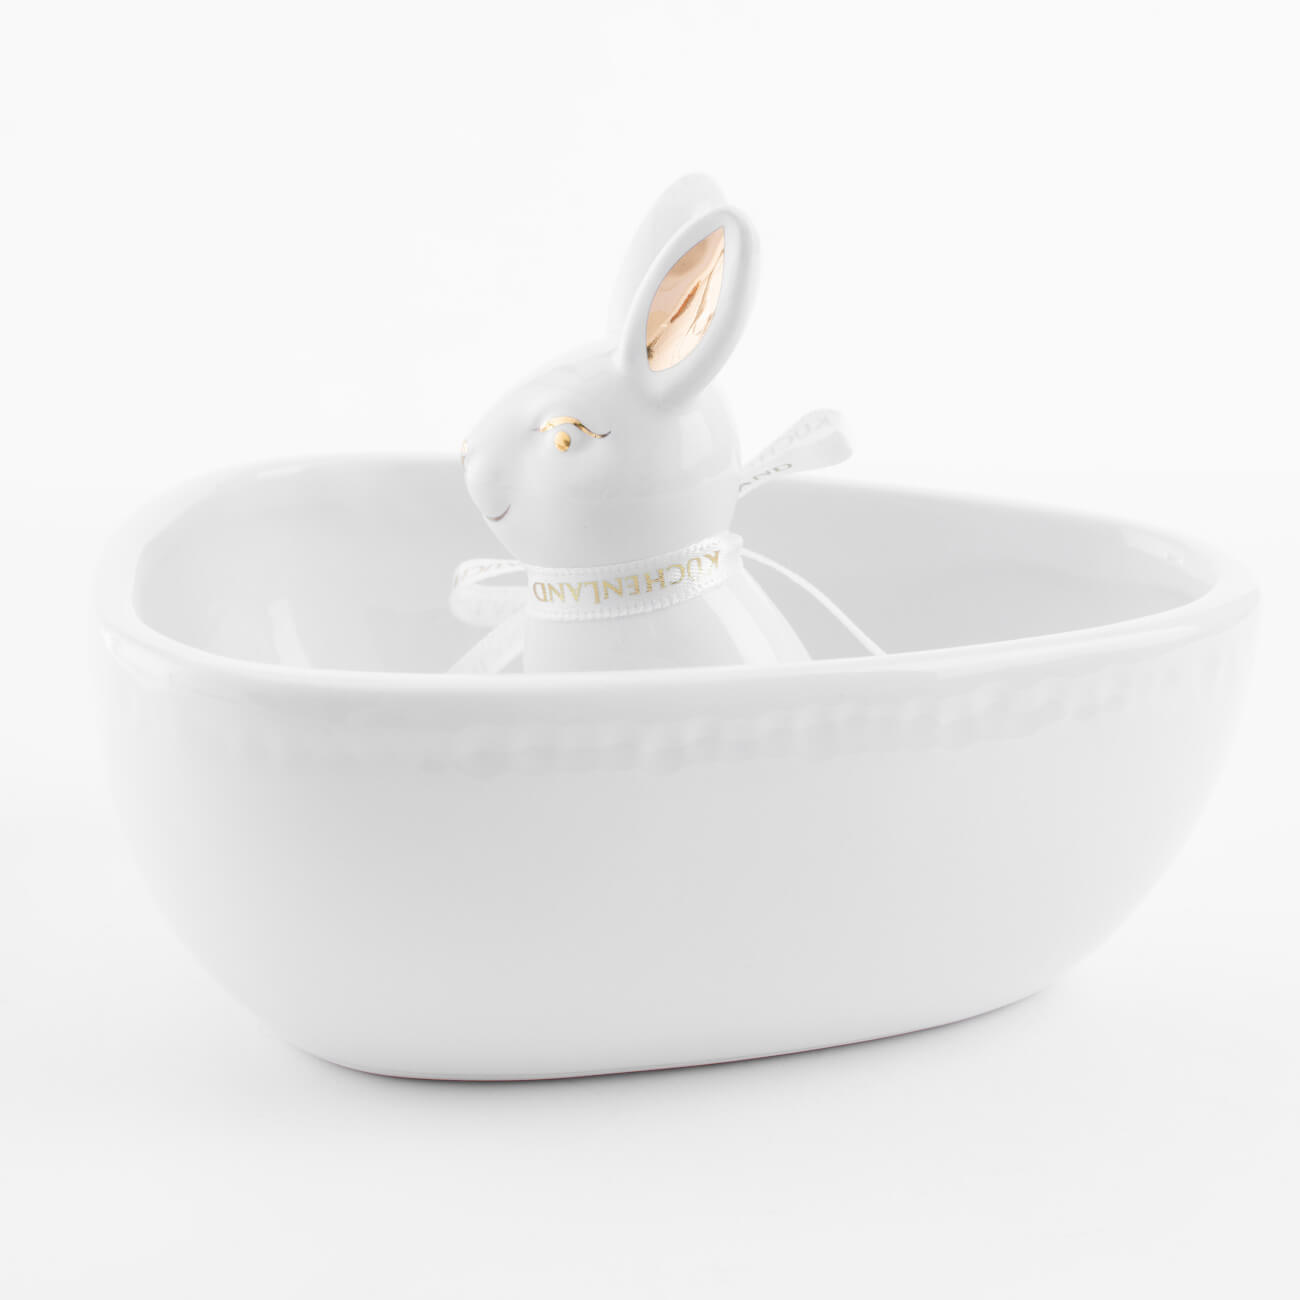 Конфетница, 13х13 см, керамика, бело-золотистая, Кролик внутри, Easter gold ferplast venere m миска для кошек керамика 300 мл